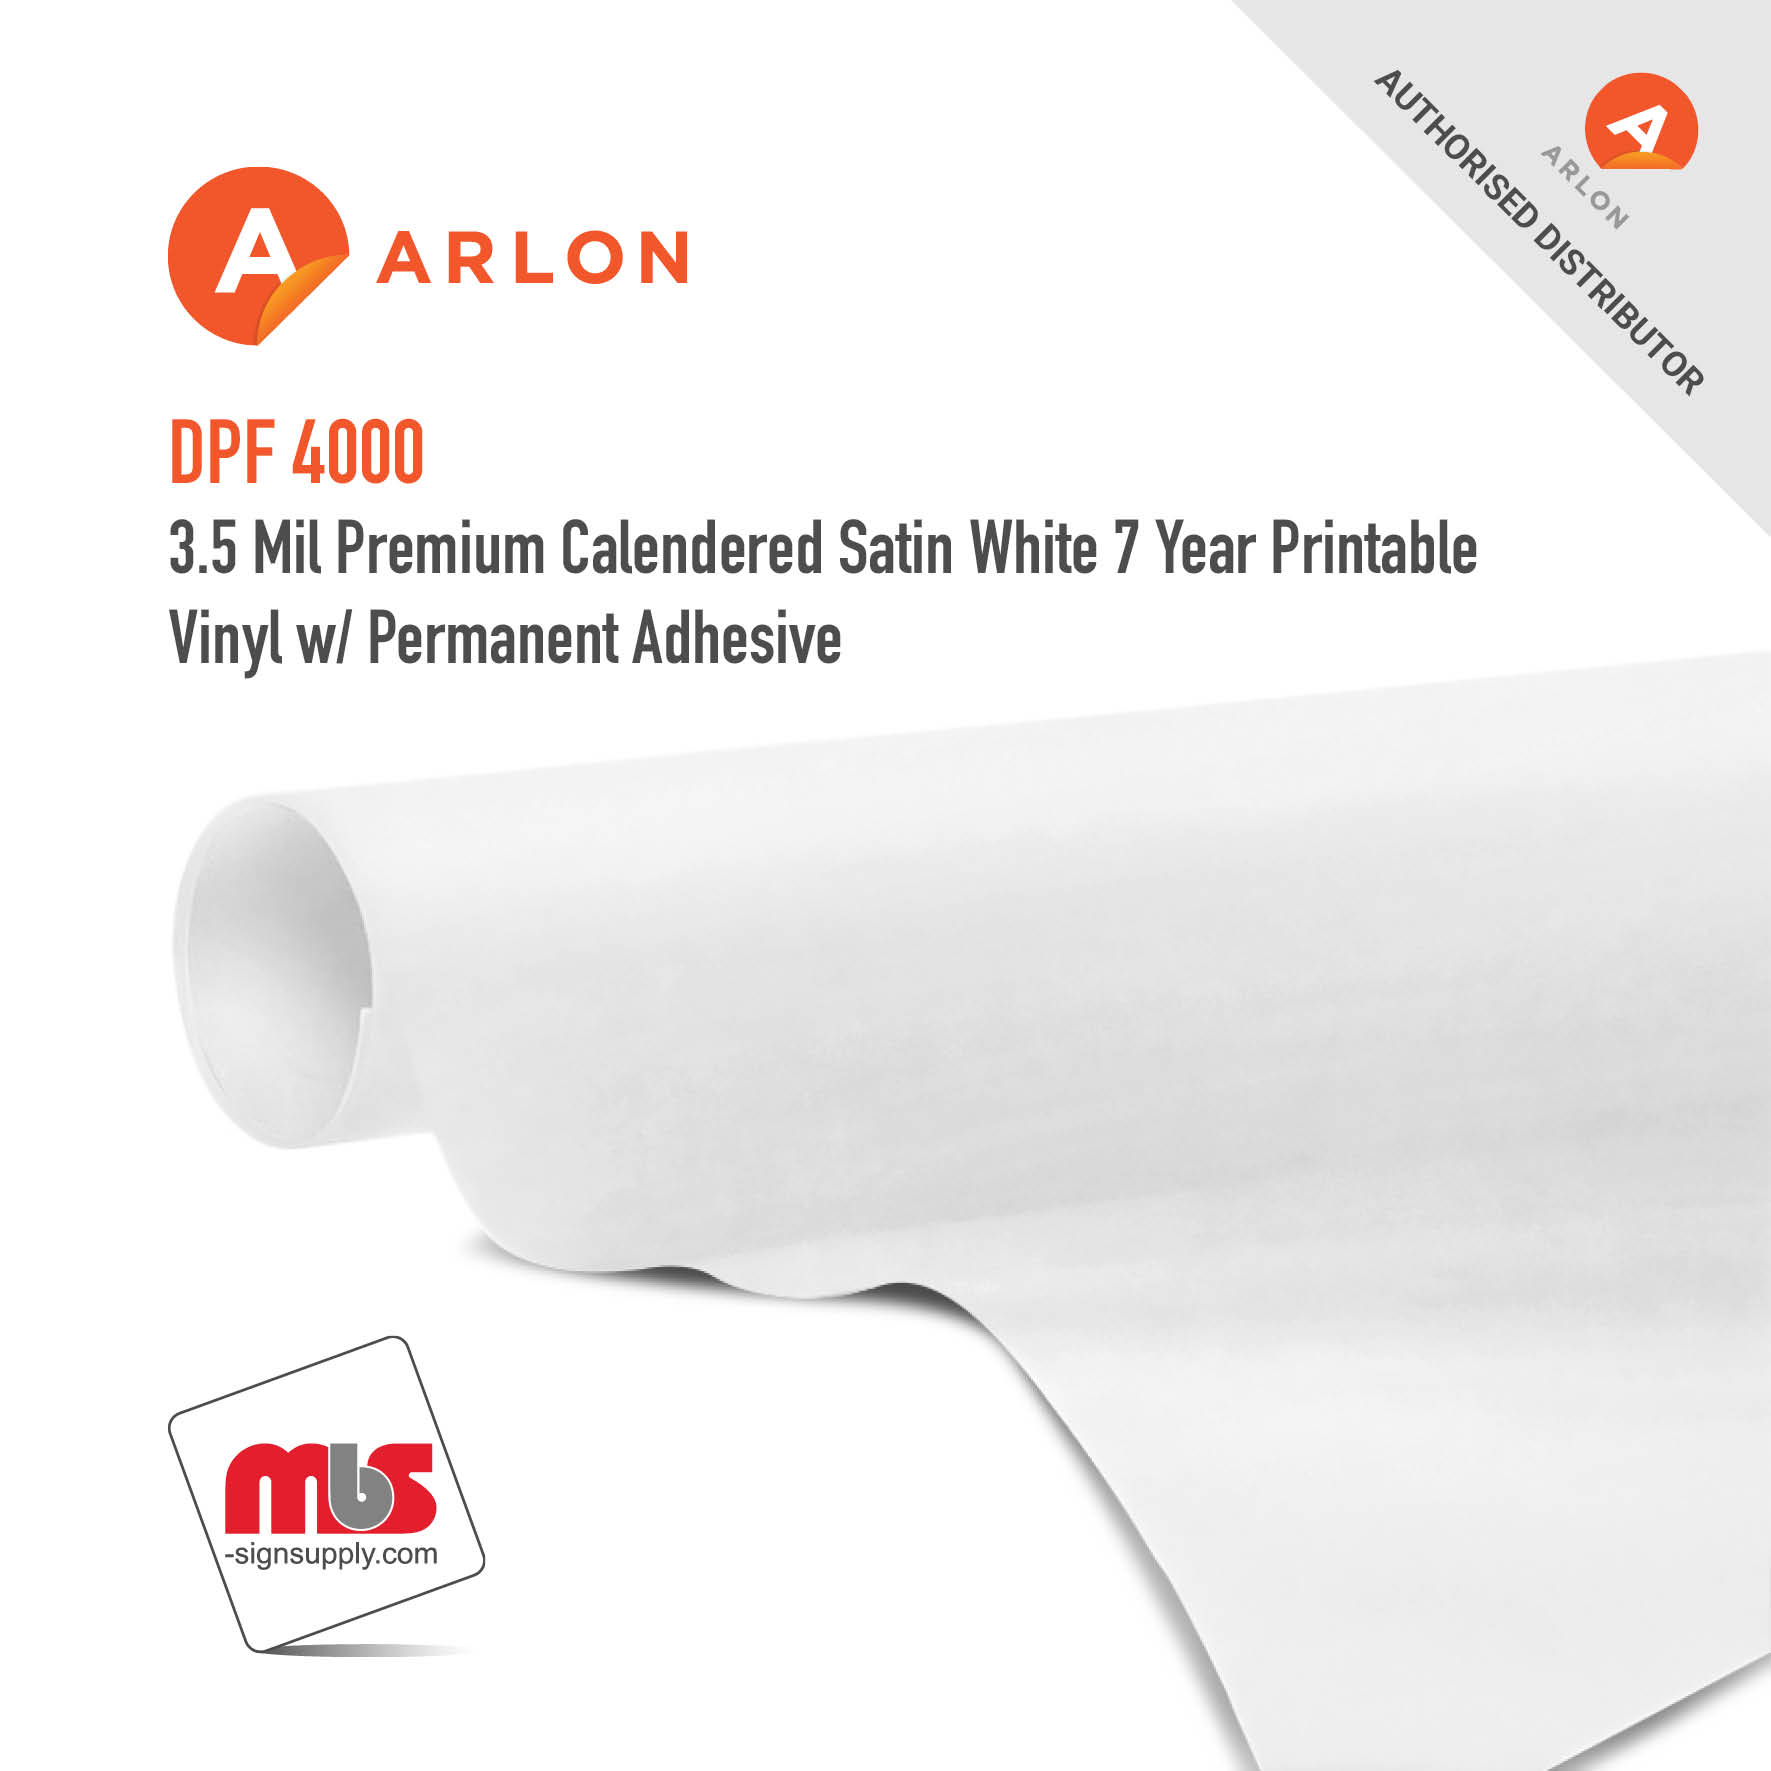 60'' x 50 Yard Roll - Arlon DPF 4000 3.5 Mil Premium Calendered Satin White 7 Year Printable Vinyl w/ Permanent Adhesive